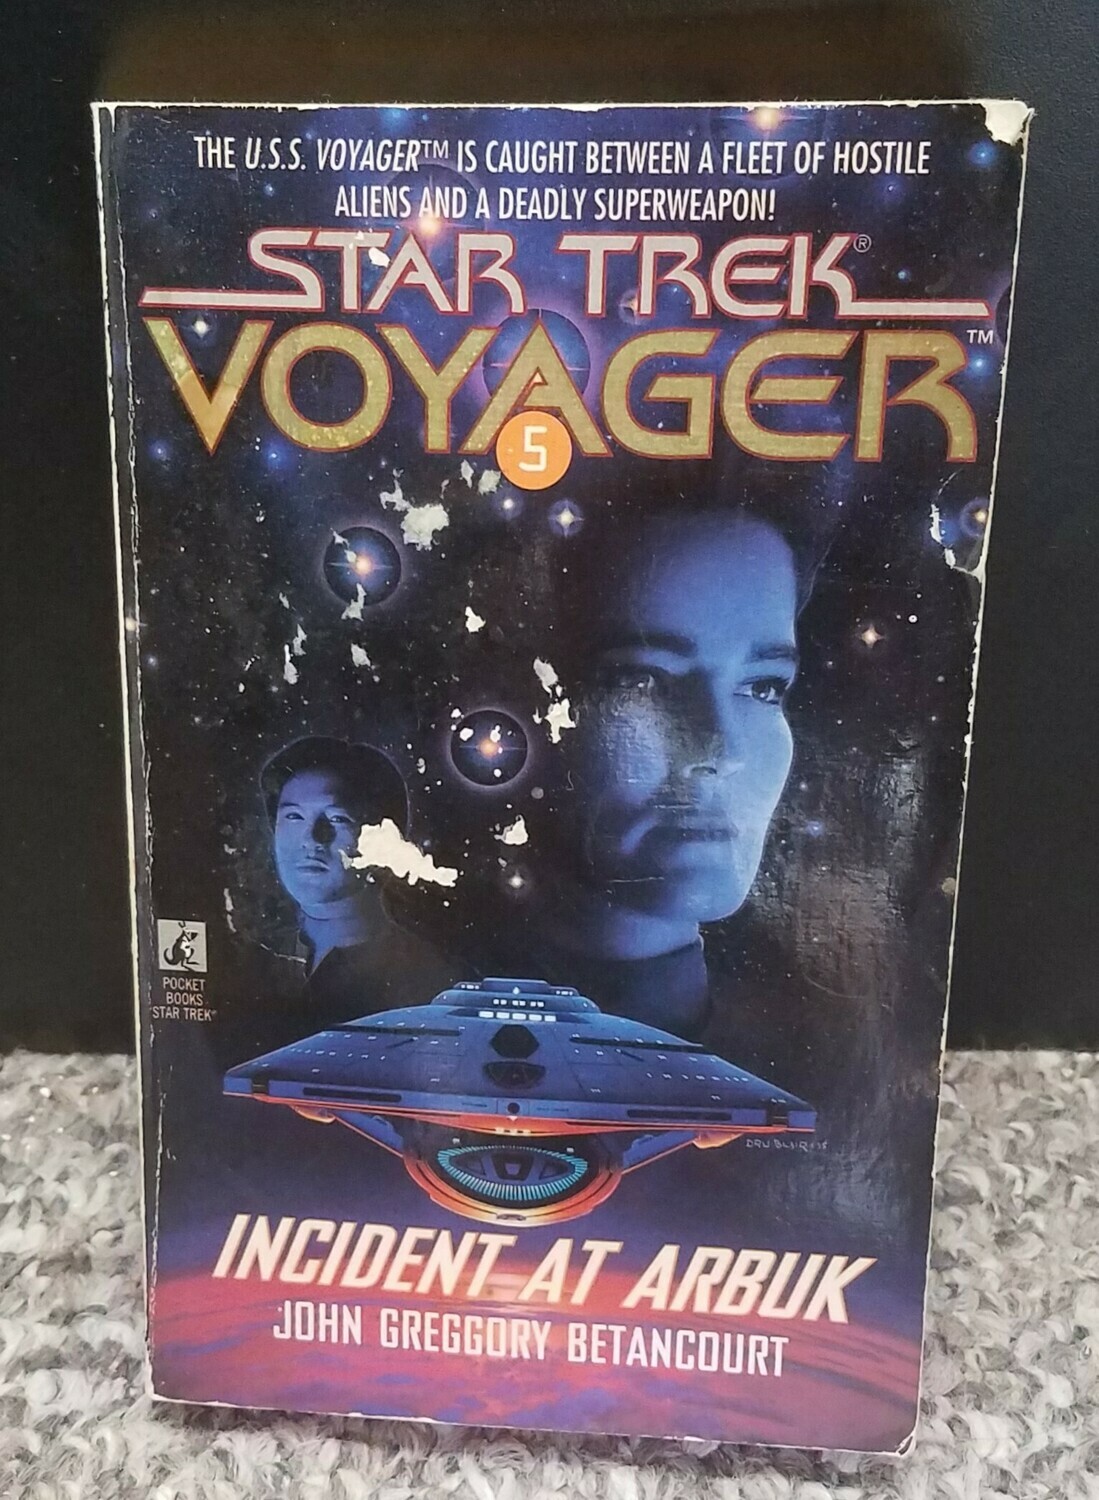 Star Trek Voyager: Incident at Arbuk by John Greggory Betancourt